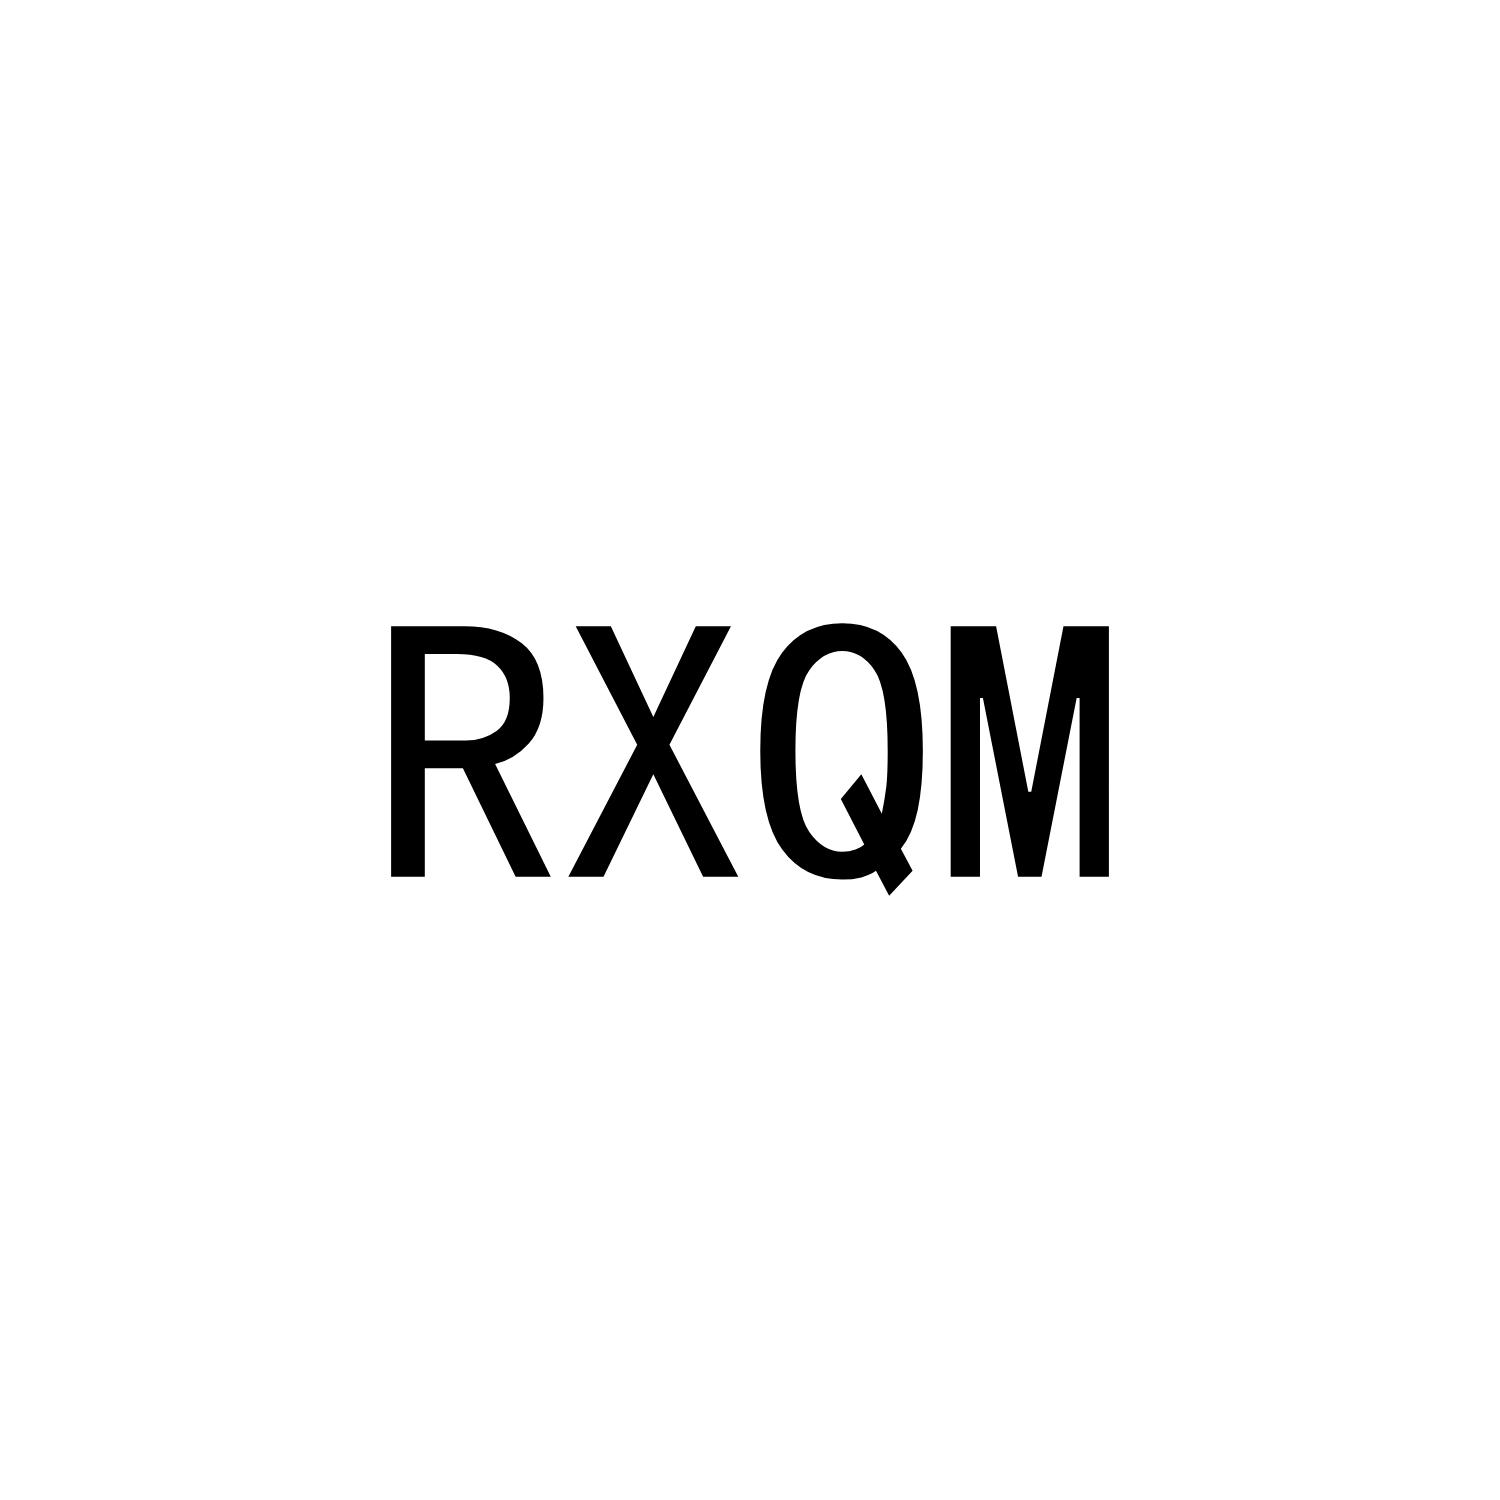 RXQM